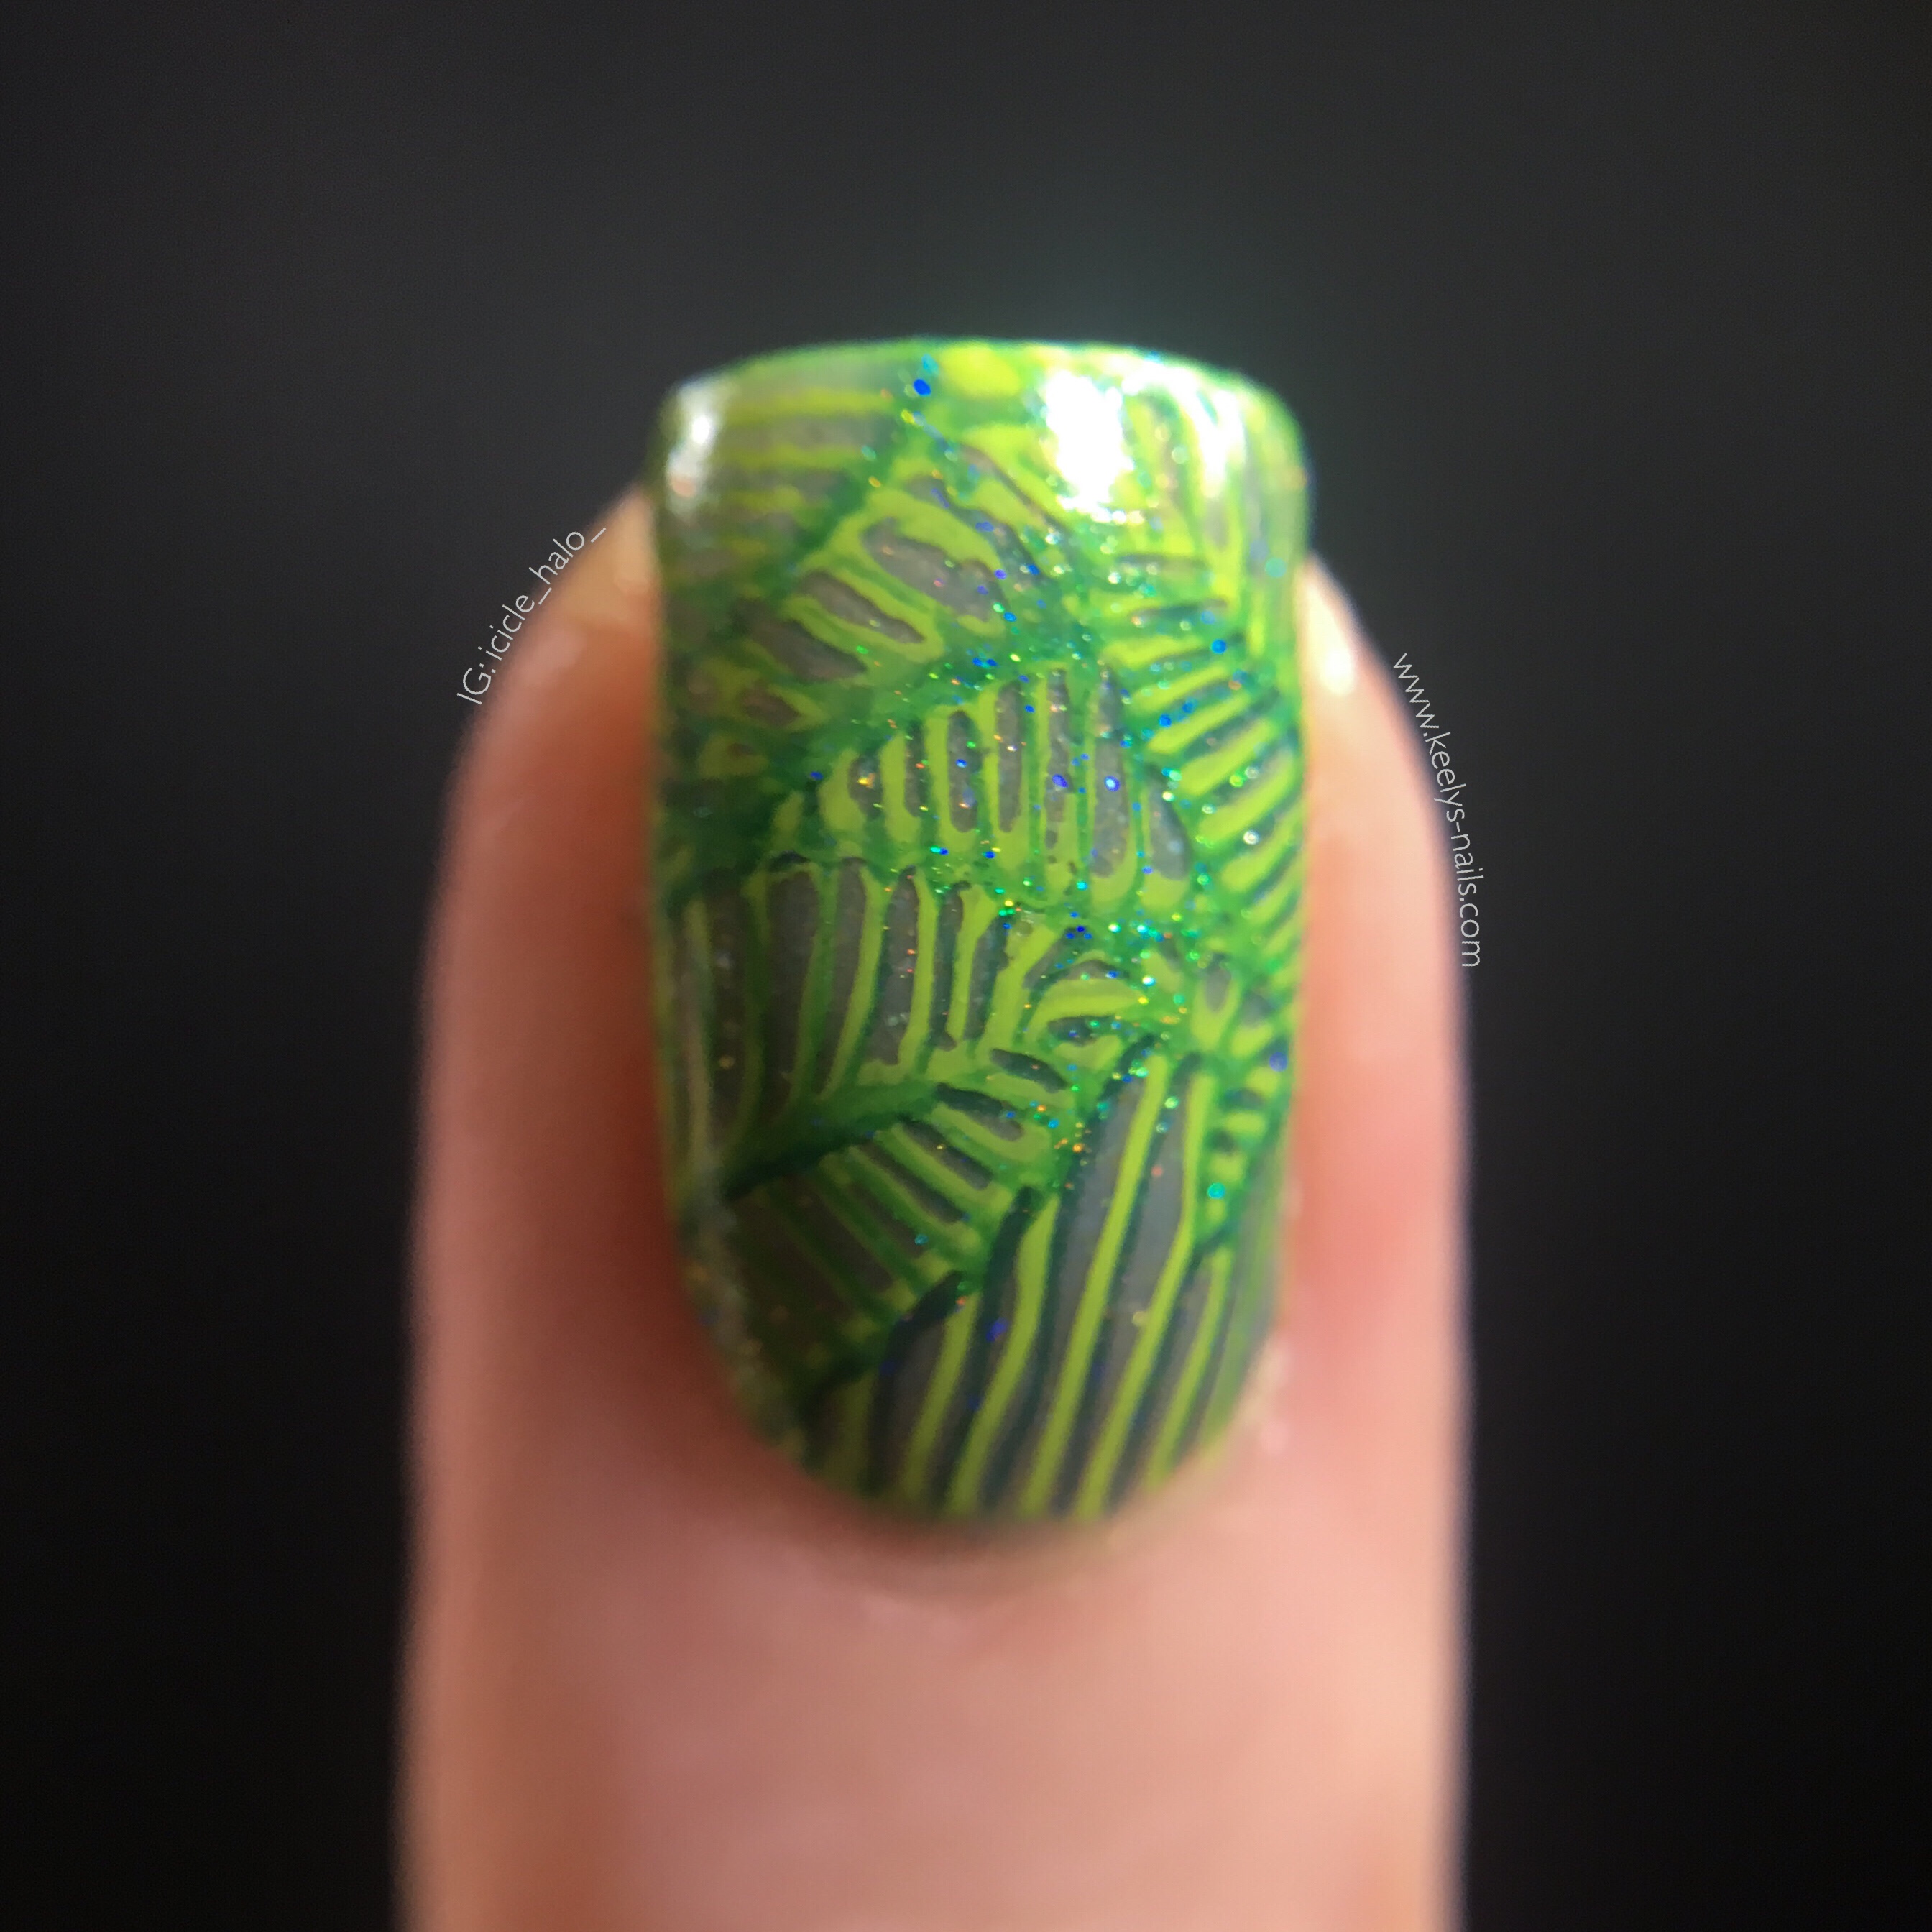 Green Aventurine Quartz nail art gemstone inspired - Keely's Nails